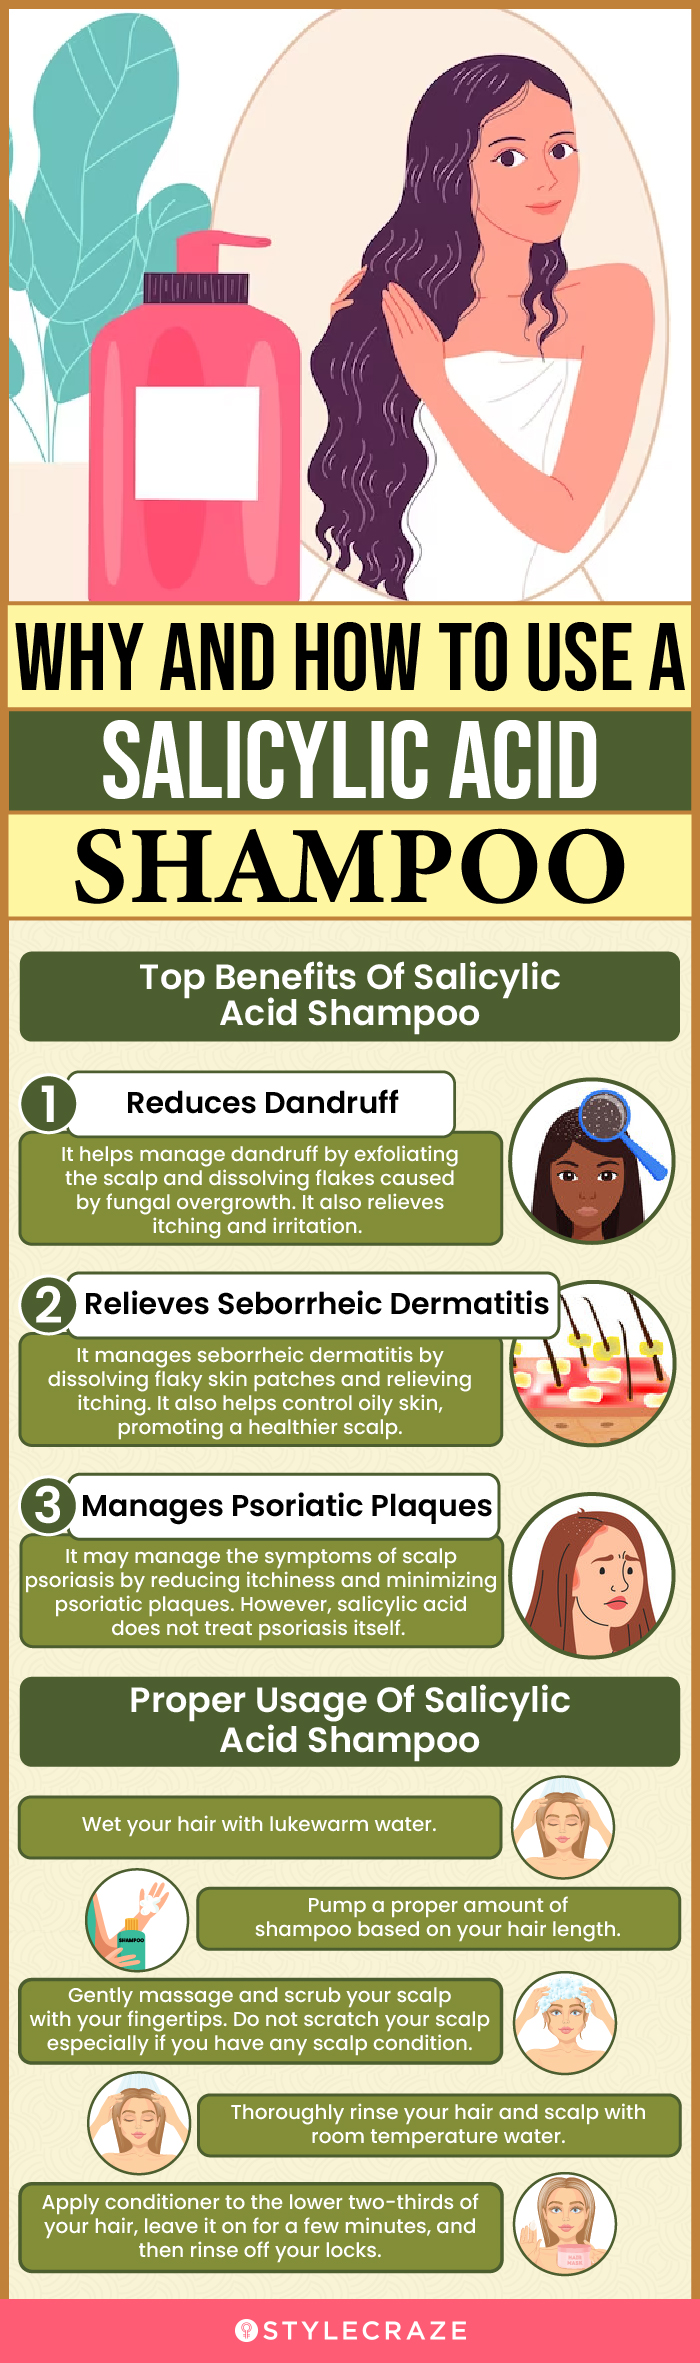 why and how to use a salicylic acid shampoo(infographic)